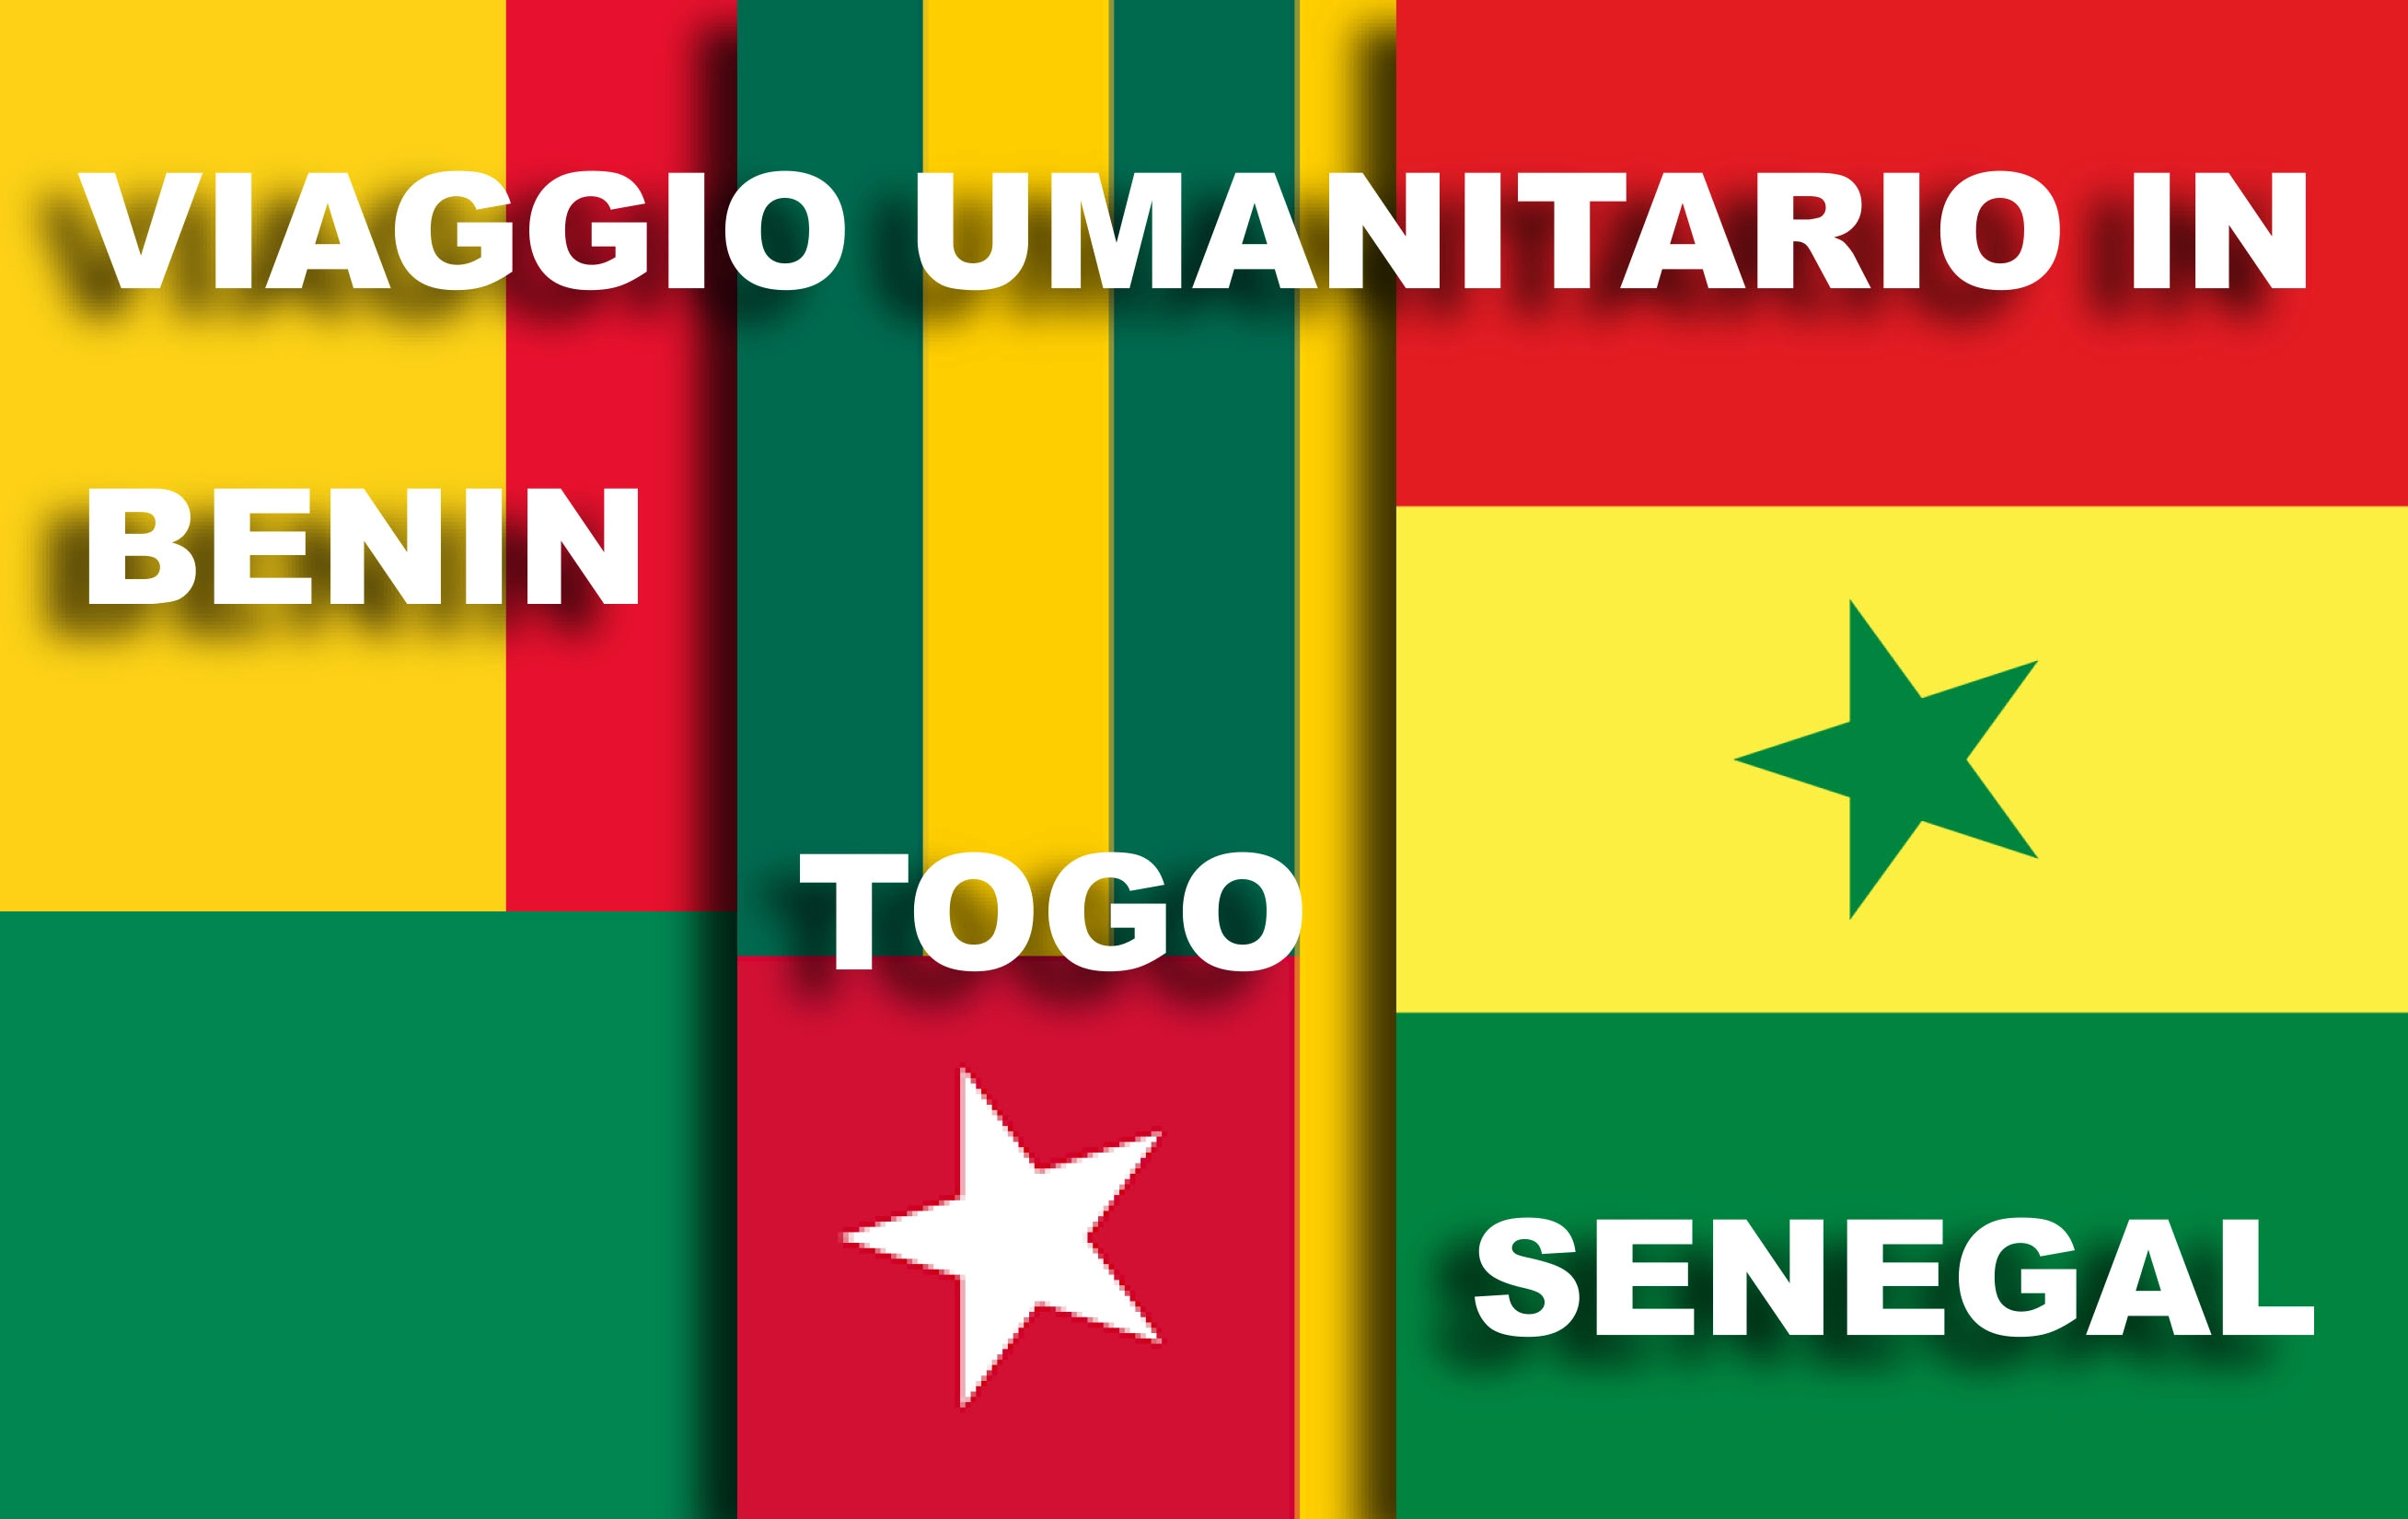 Viaggio Umanitario in Benin, Togo e Senegal